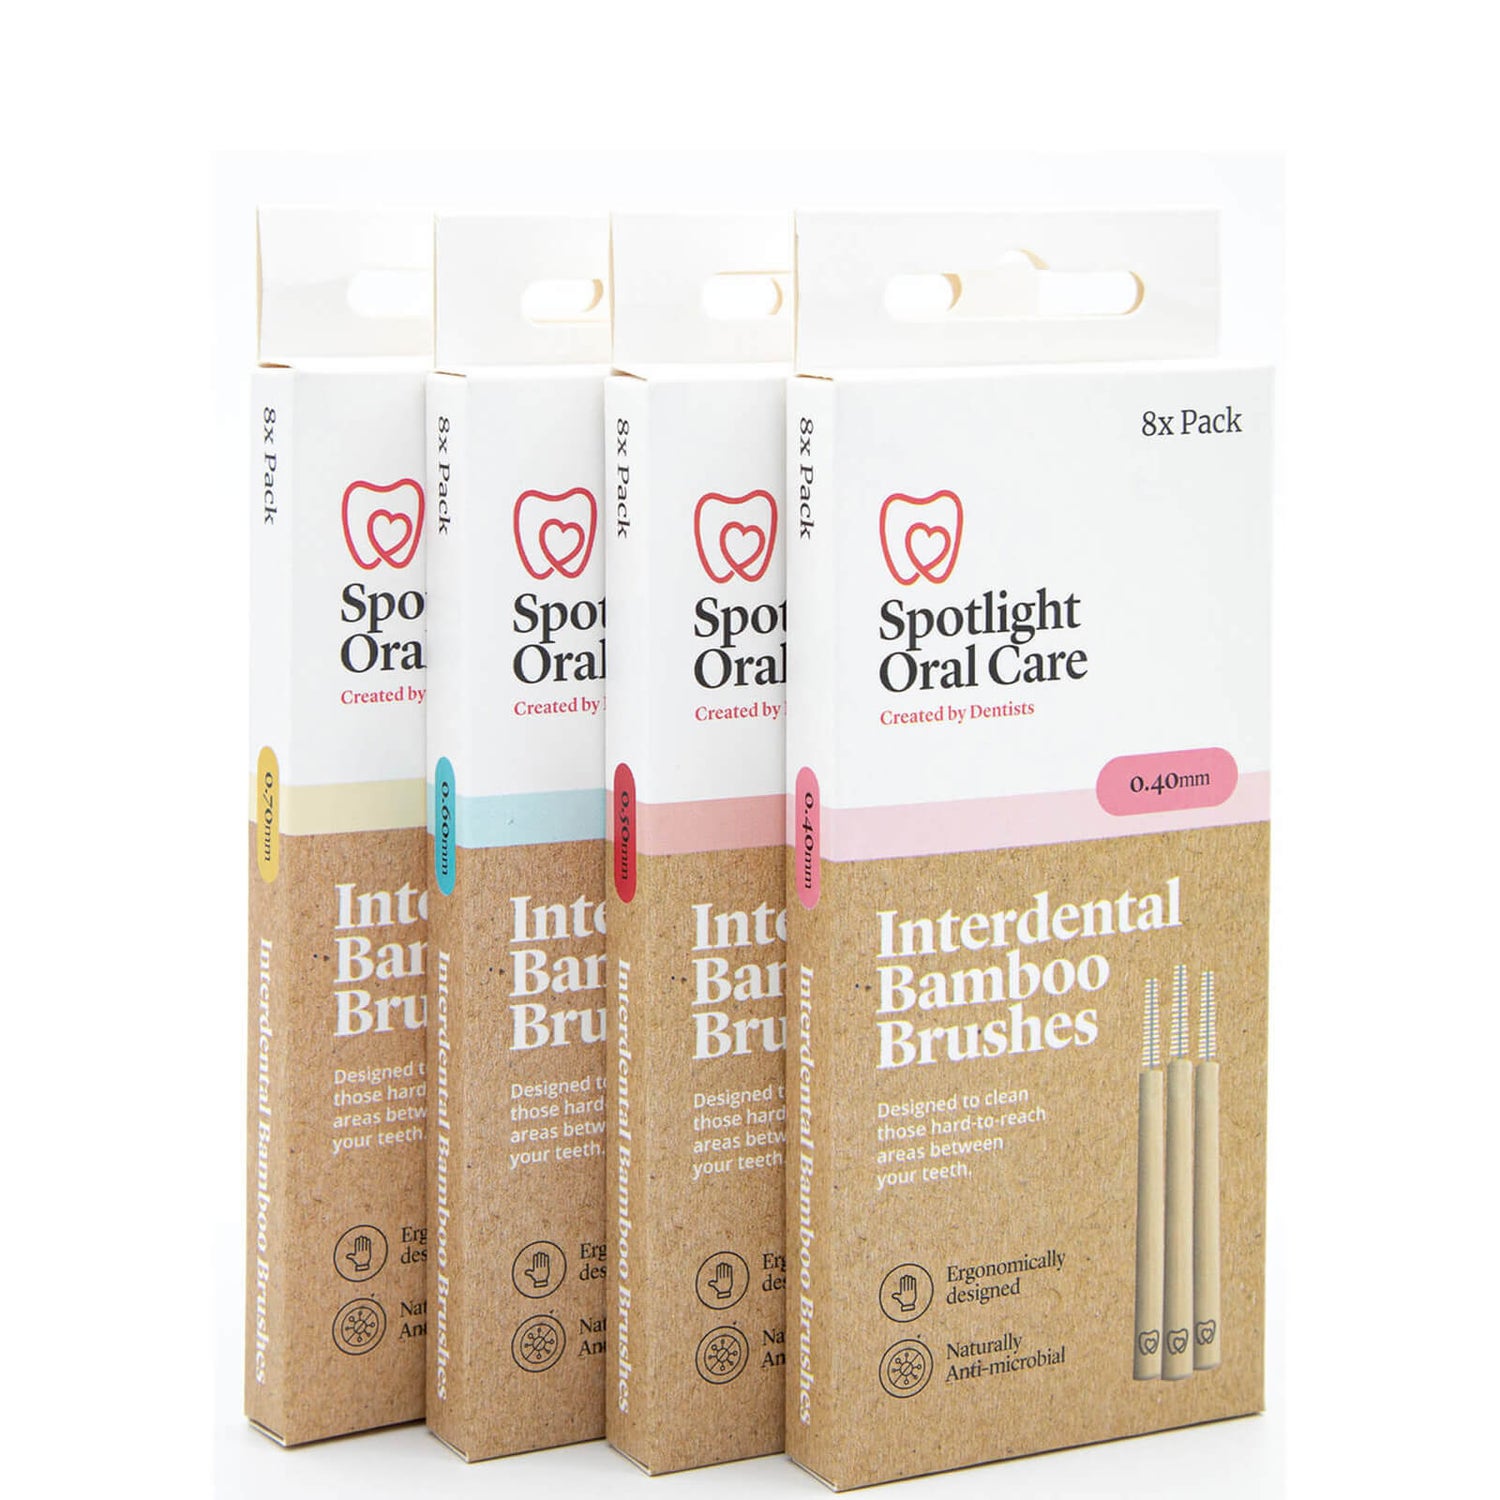 Spotlight Oral Care Interdental Bamboo Brushes